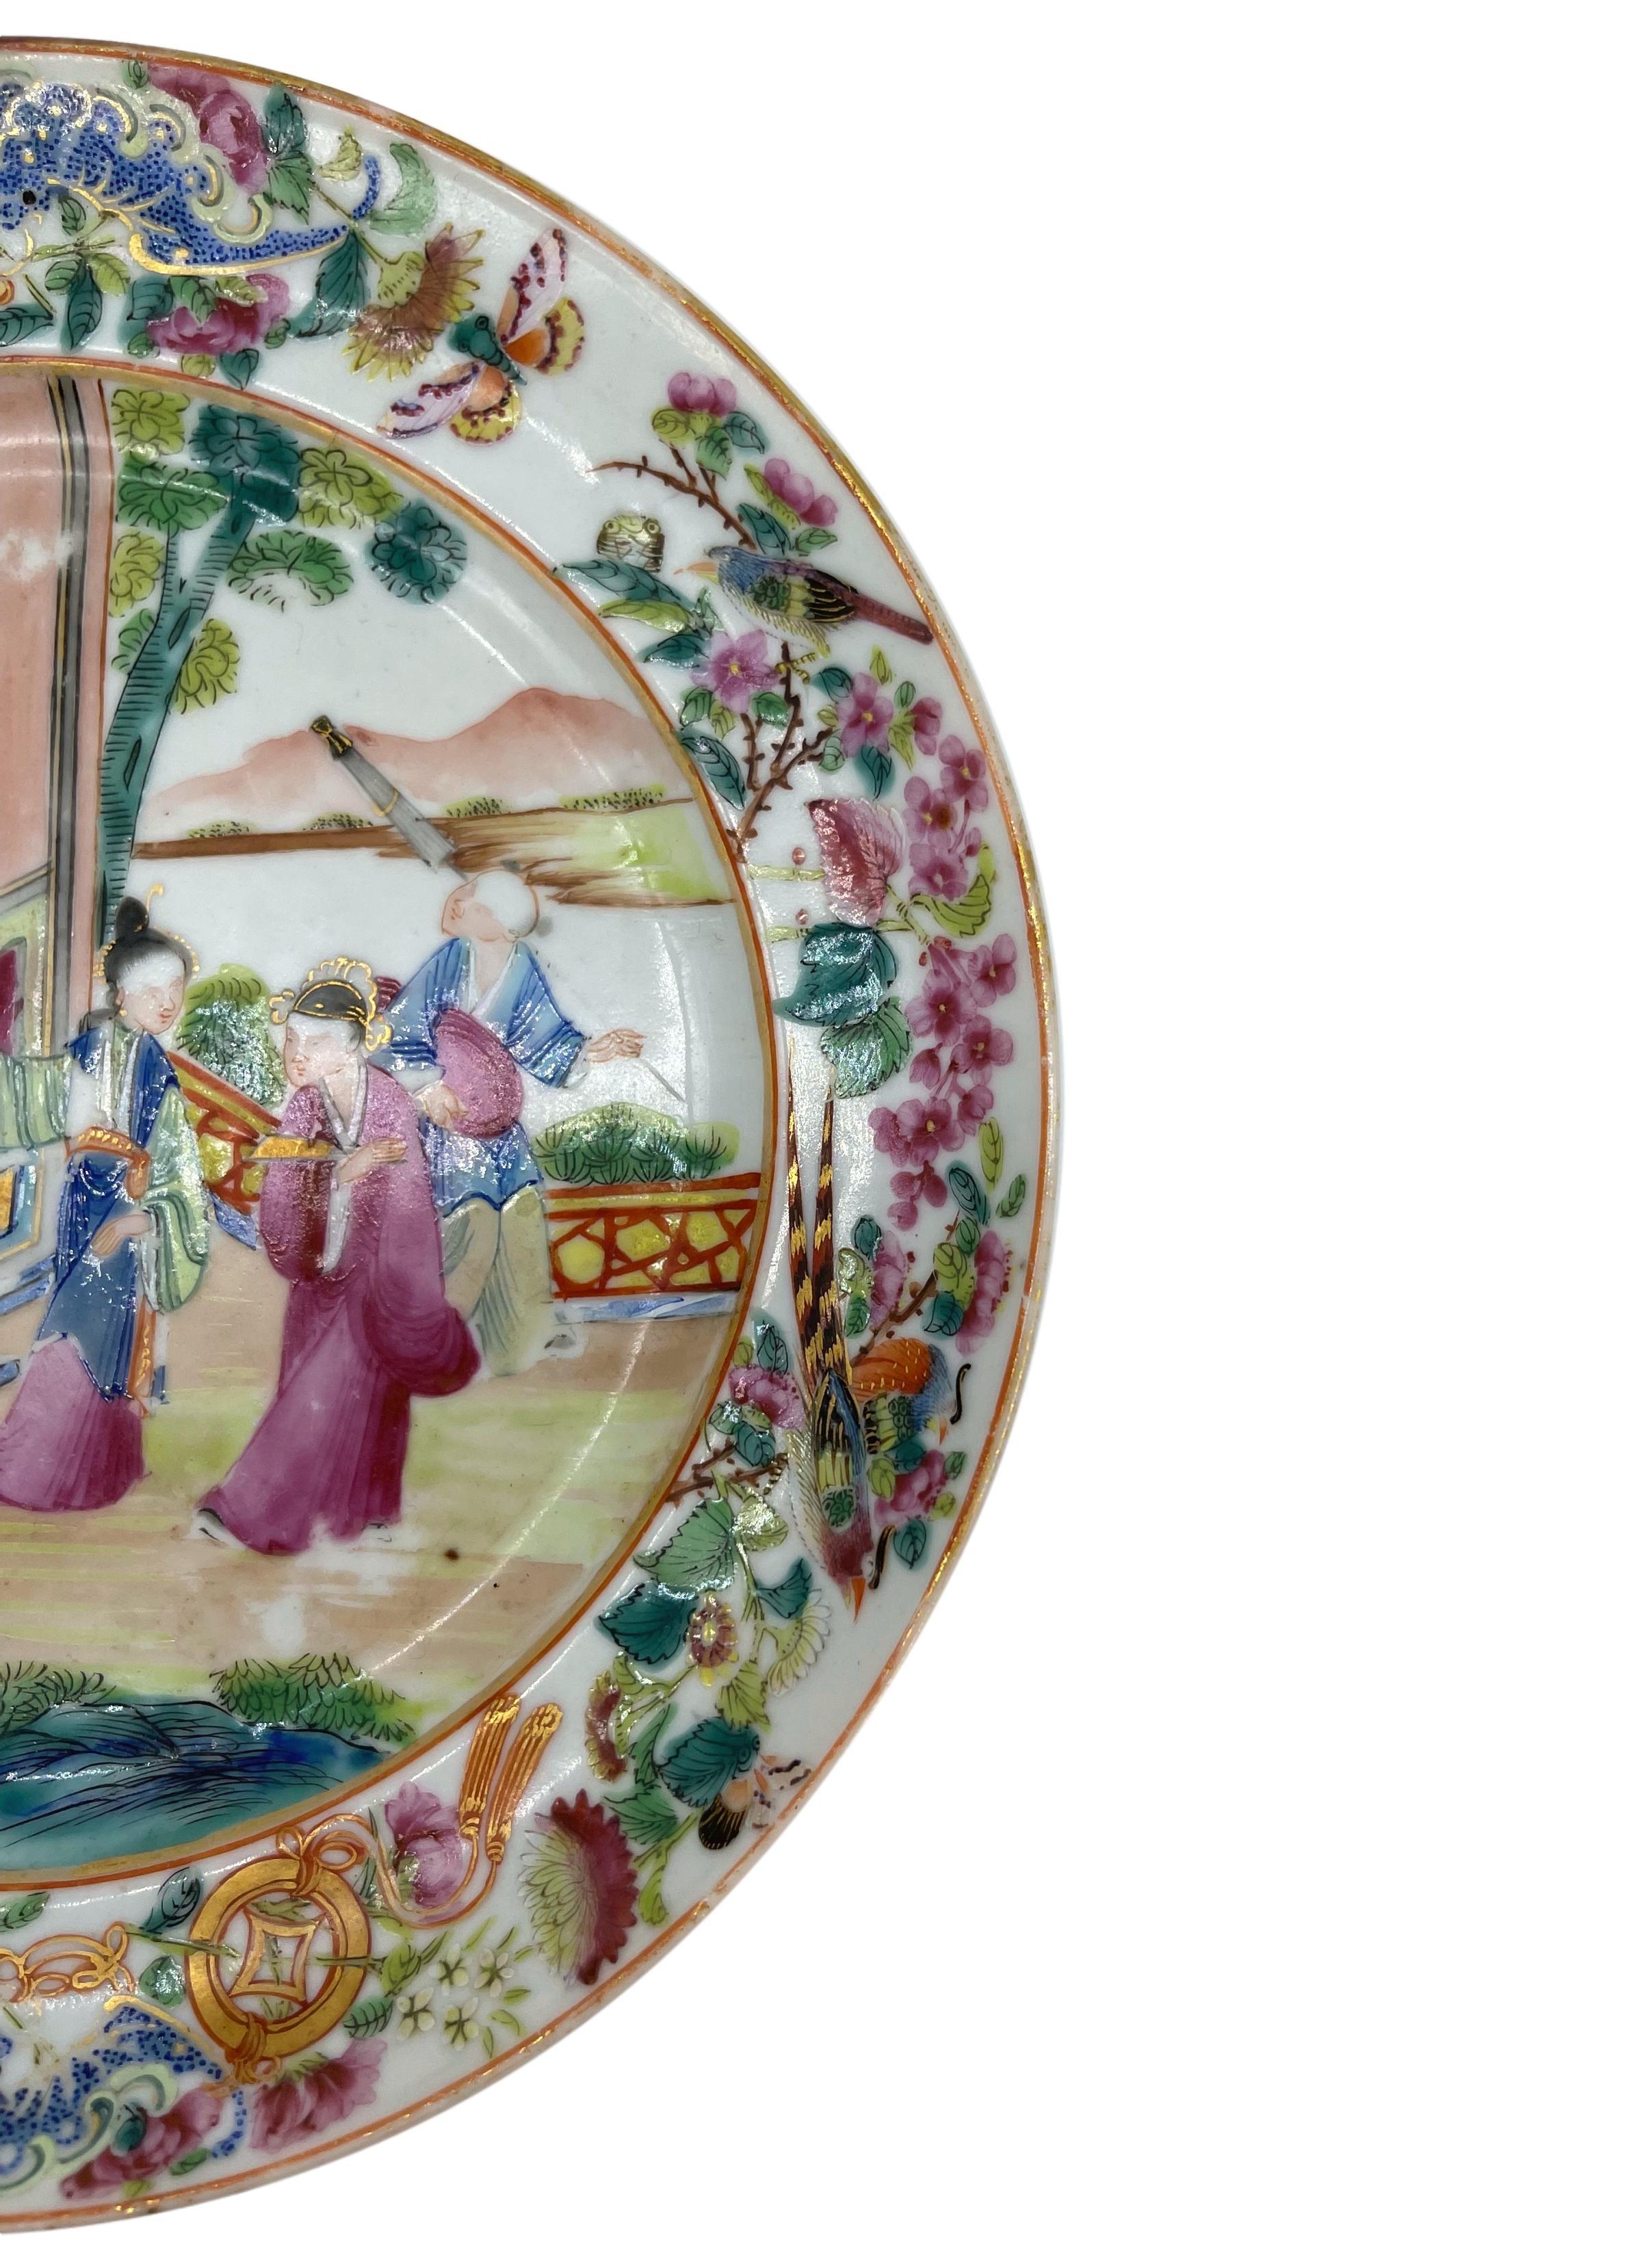 Enameled Chinese Export Porcelain Rose Mandarin Plate 8-ins, Canton, ca. 1840 